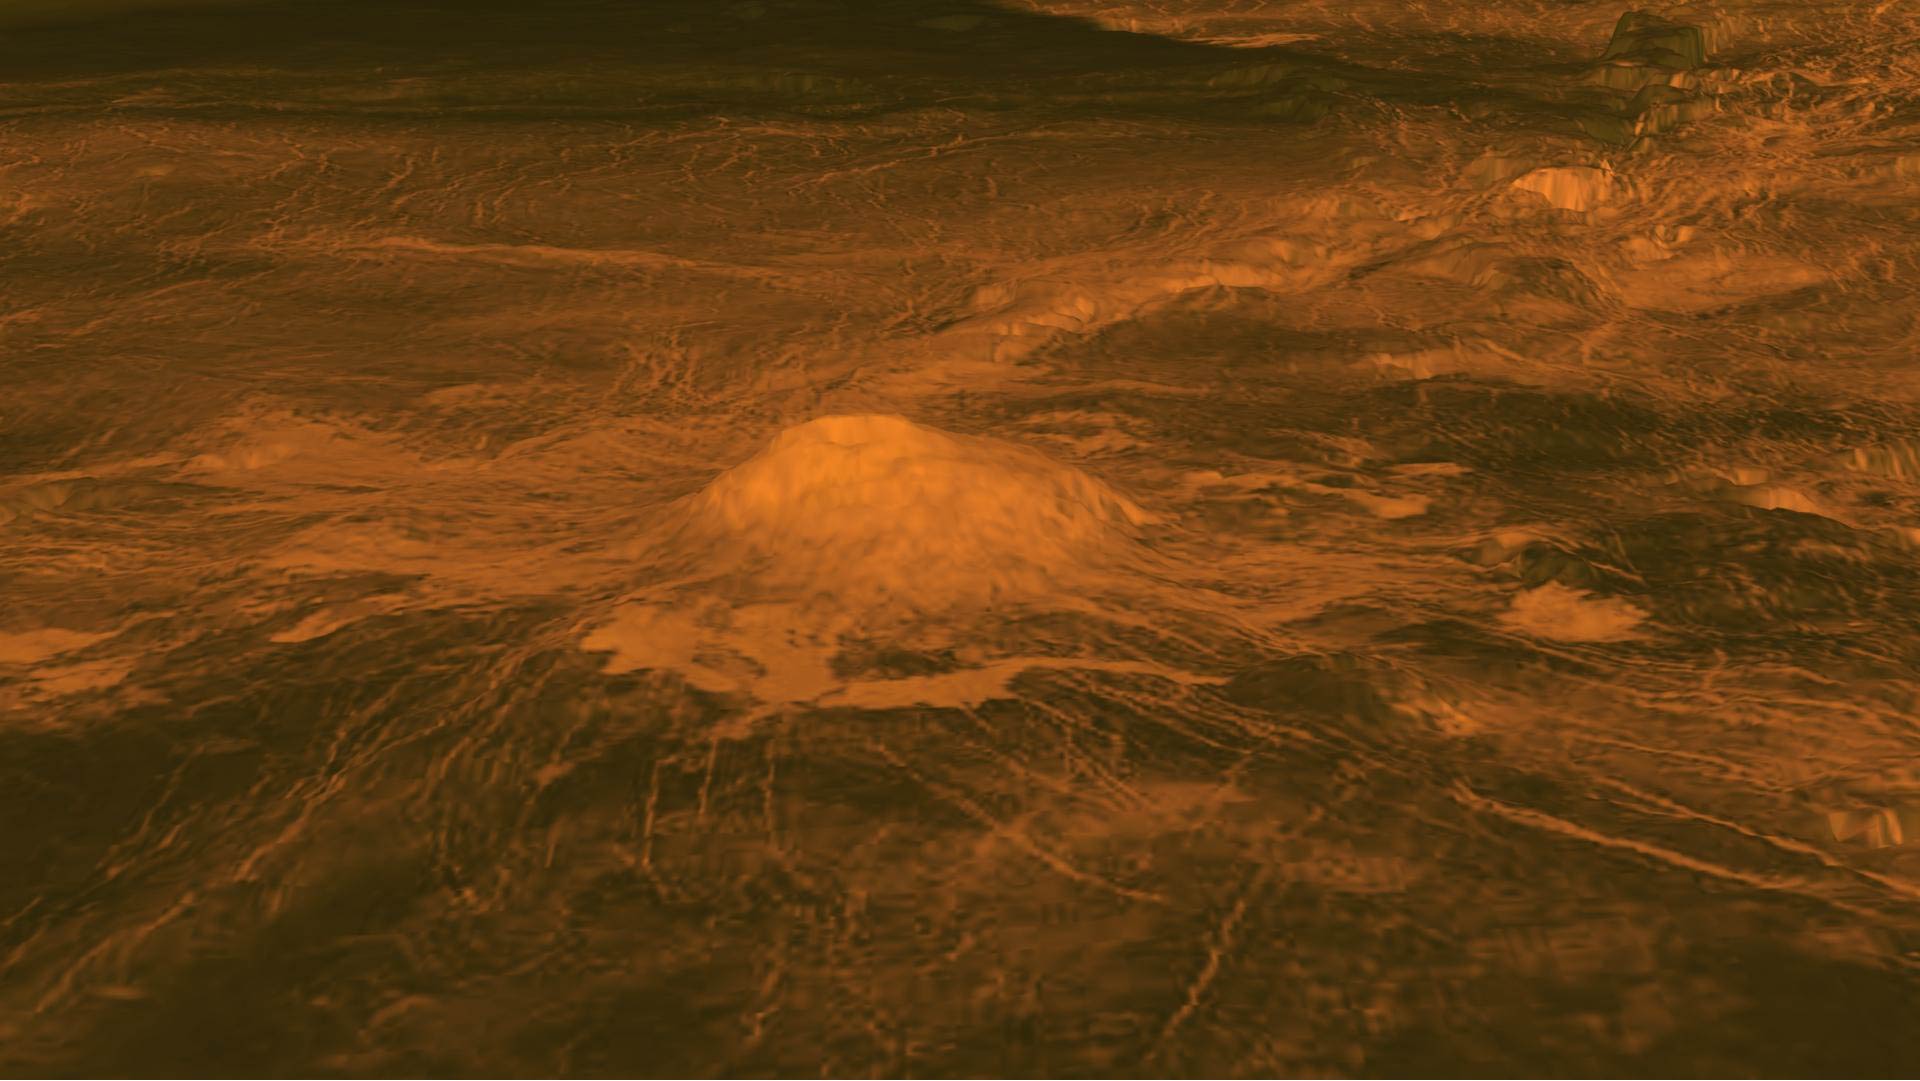 This figure shows the volcanic peak Idunn Mons in the Imdr Regio area of Venus